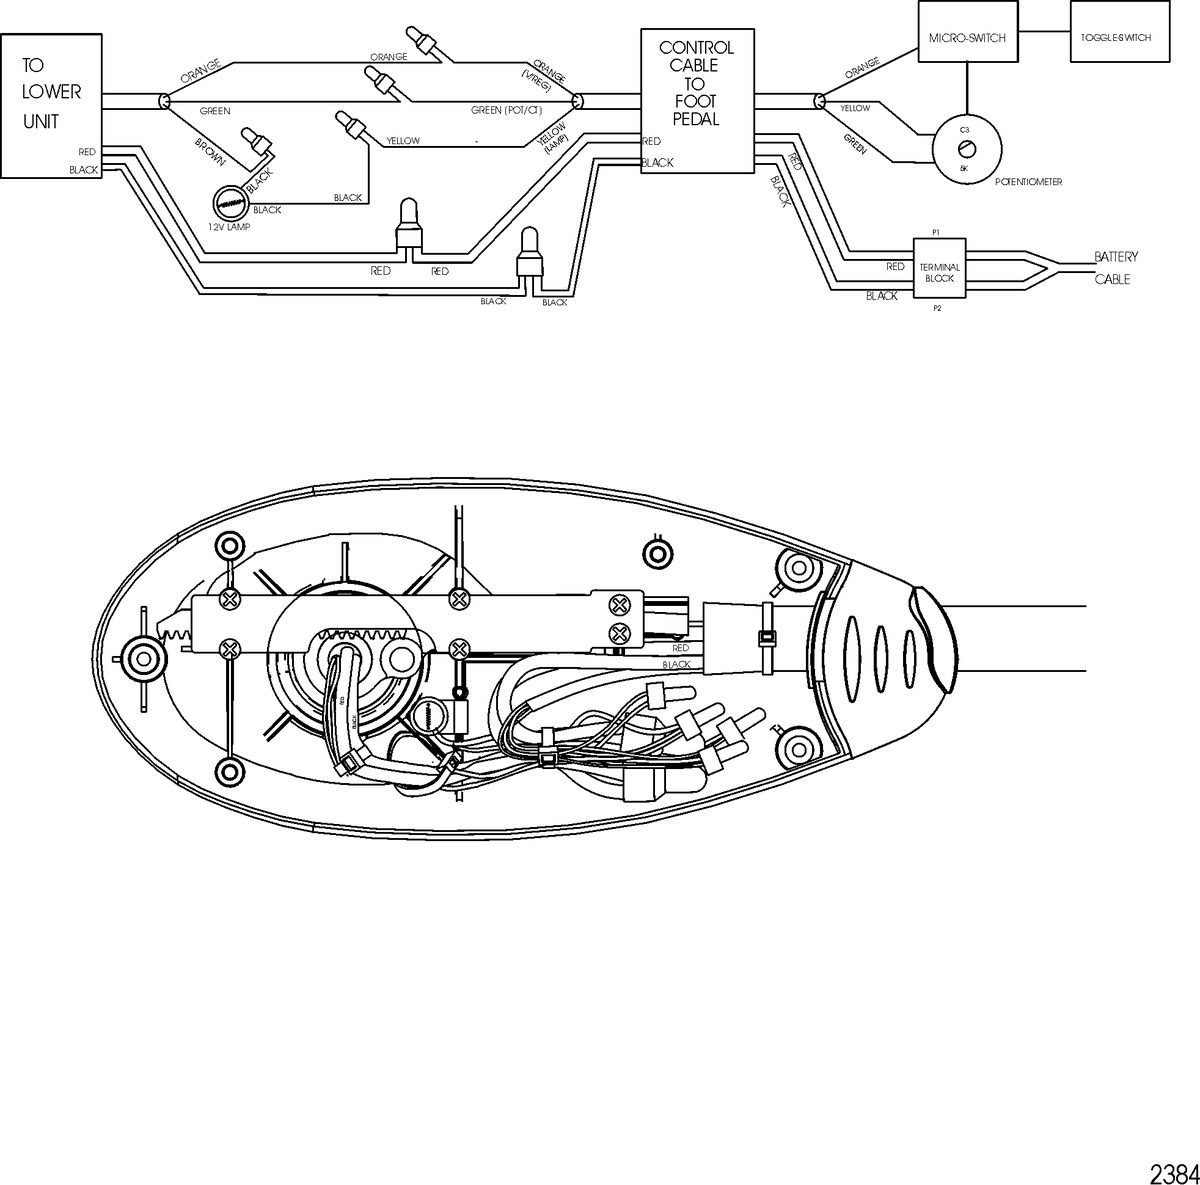 TROLLING MOTOR MOTORGUIDE SALT WATER SERIES Wire Diagram(Model SW82FBD)